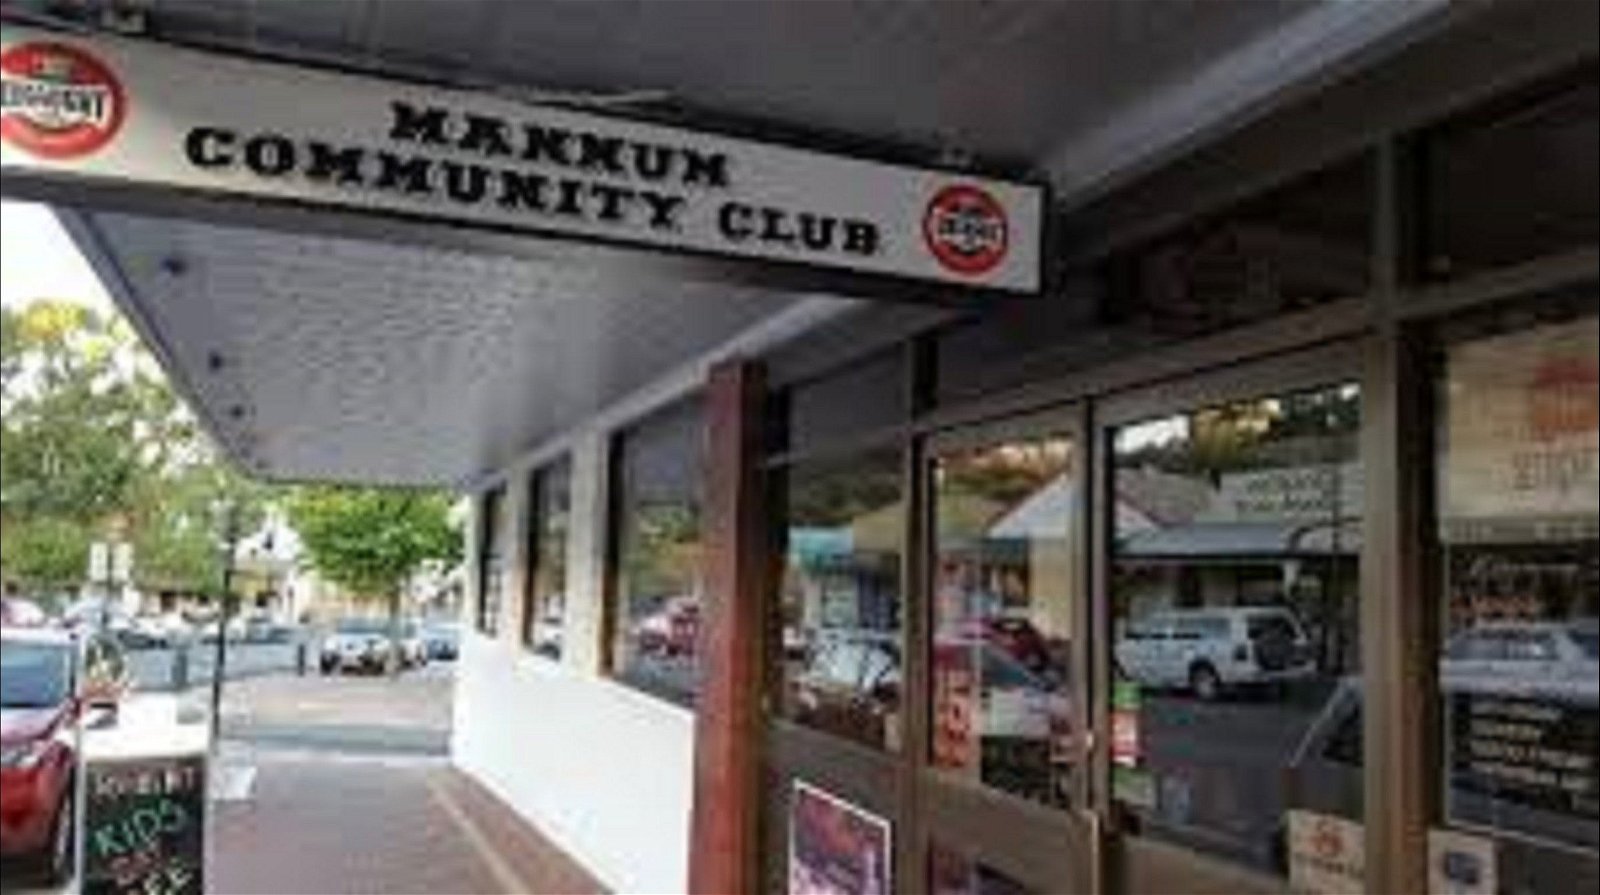 Mannum Community Club - Surfers Paradise Gold Coast